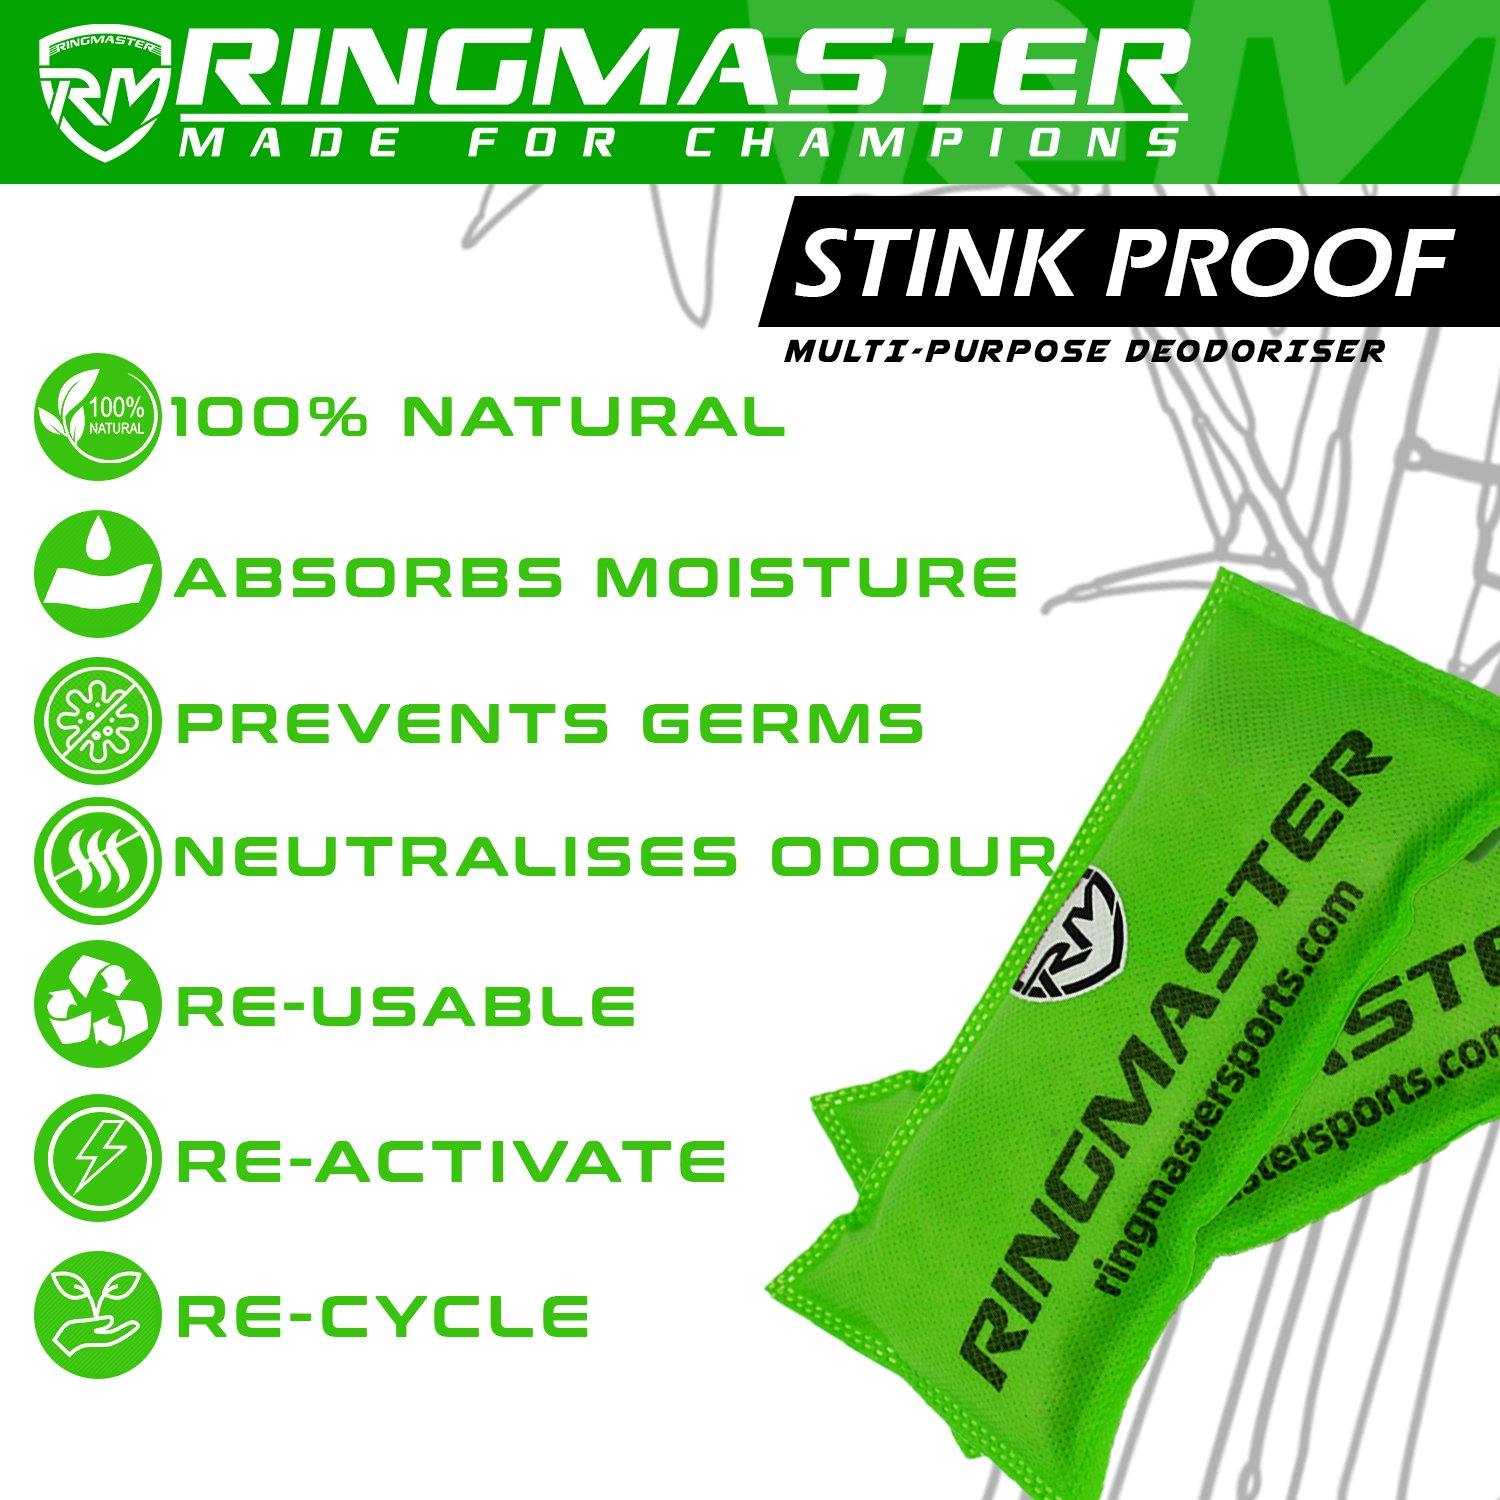 RingMaster Sports Stink Proof Sports Glove Deodoriser No Stink - RingMaster Sports